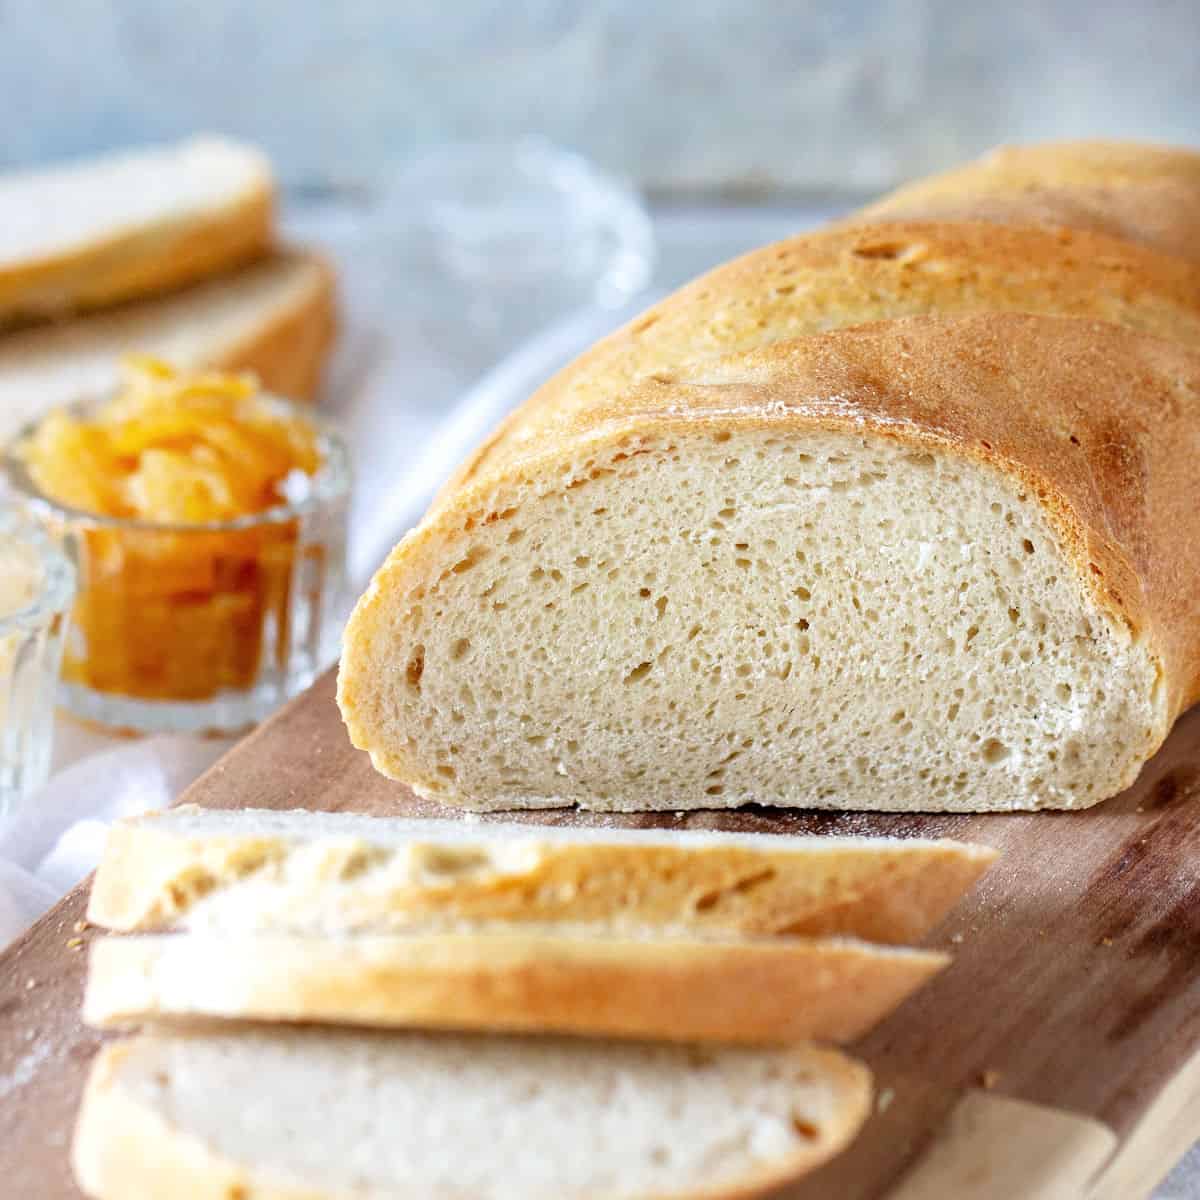 https://vintagekitchennotes.com/wp-content/uploads/2019/10/Sliced-semolina-Bread-on-a-board.jpeg